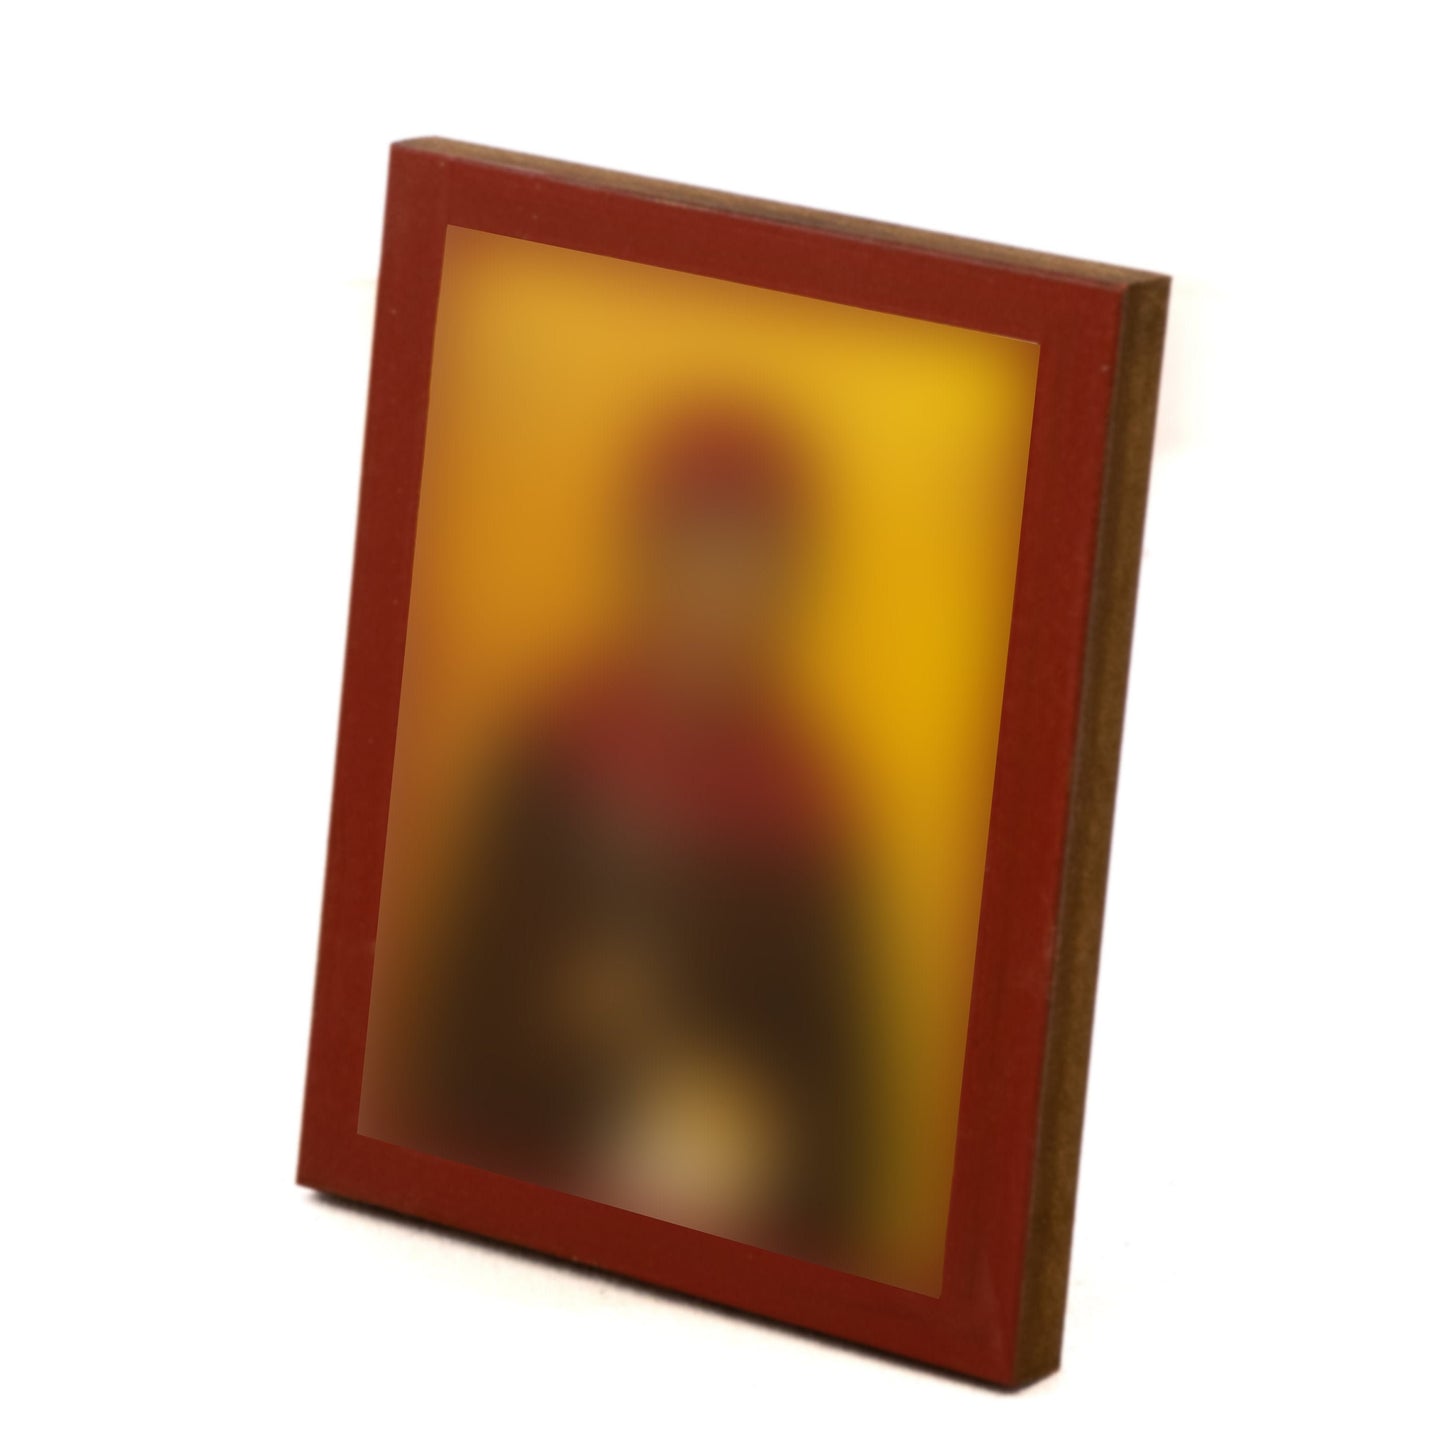 Jesus Christ icon Sina, Handmade Greek Orthodox icon of Jesus Christ Sinai, Byzantine wood plaque TheHolyArt